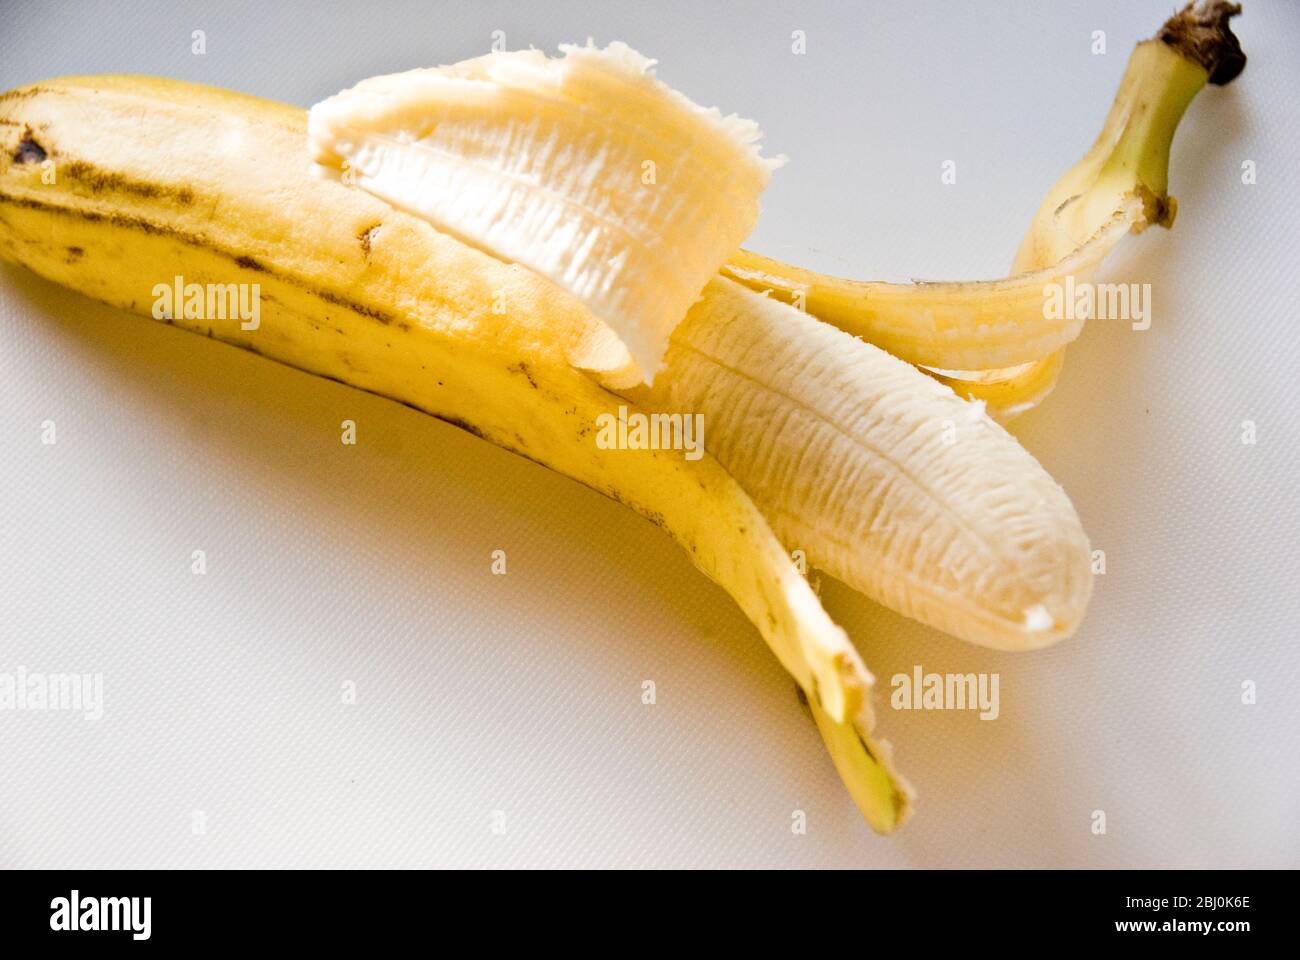 Half peeled banana on white surface - Stock Photo